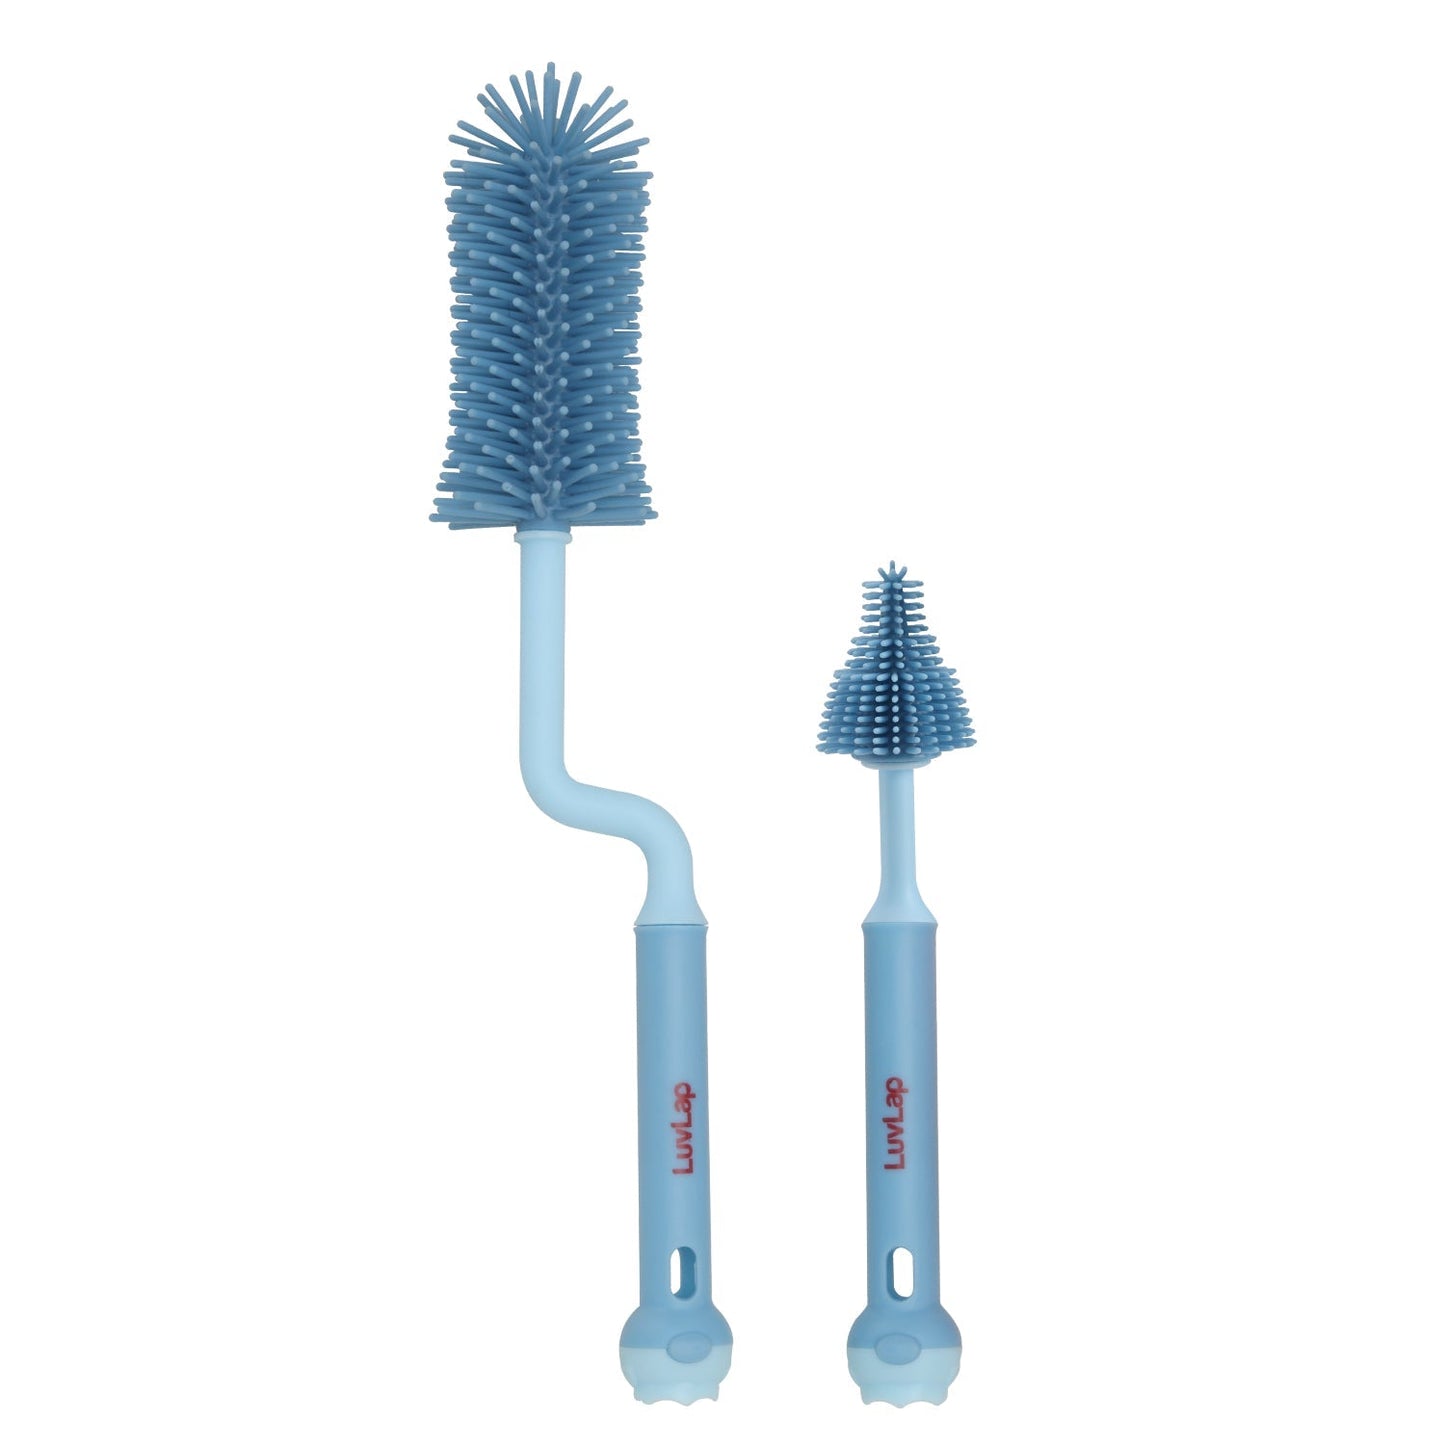 Silicone Bristle Brush & Nipple Cleaner, Blue